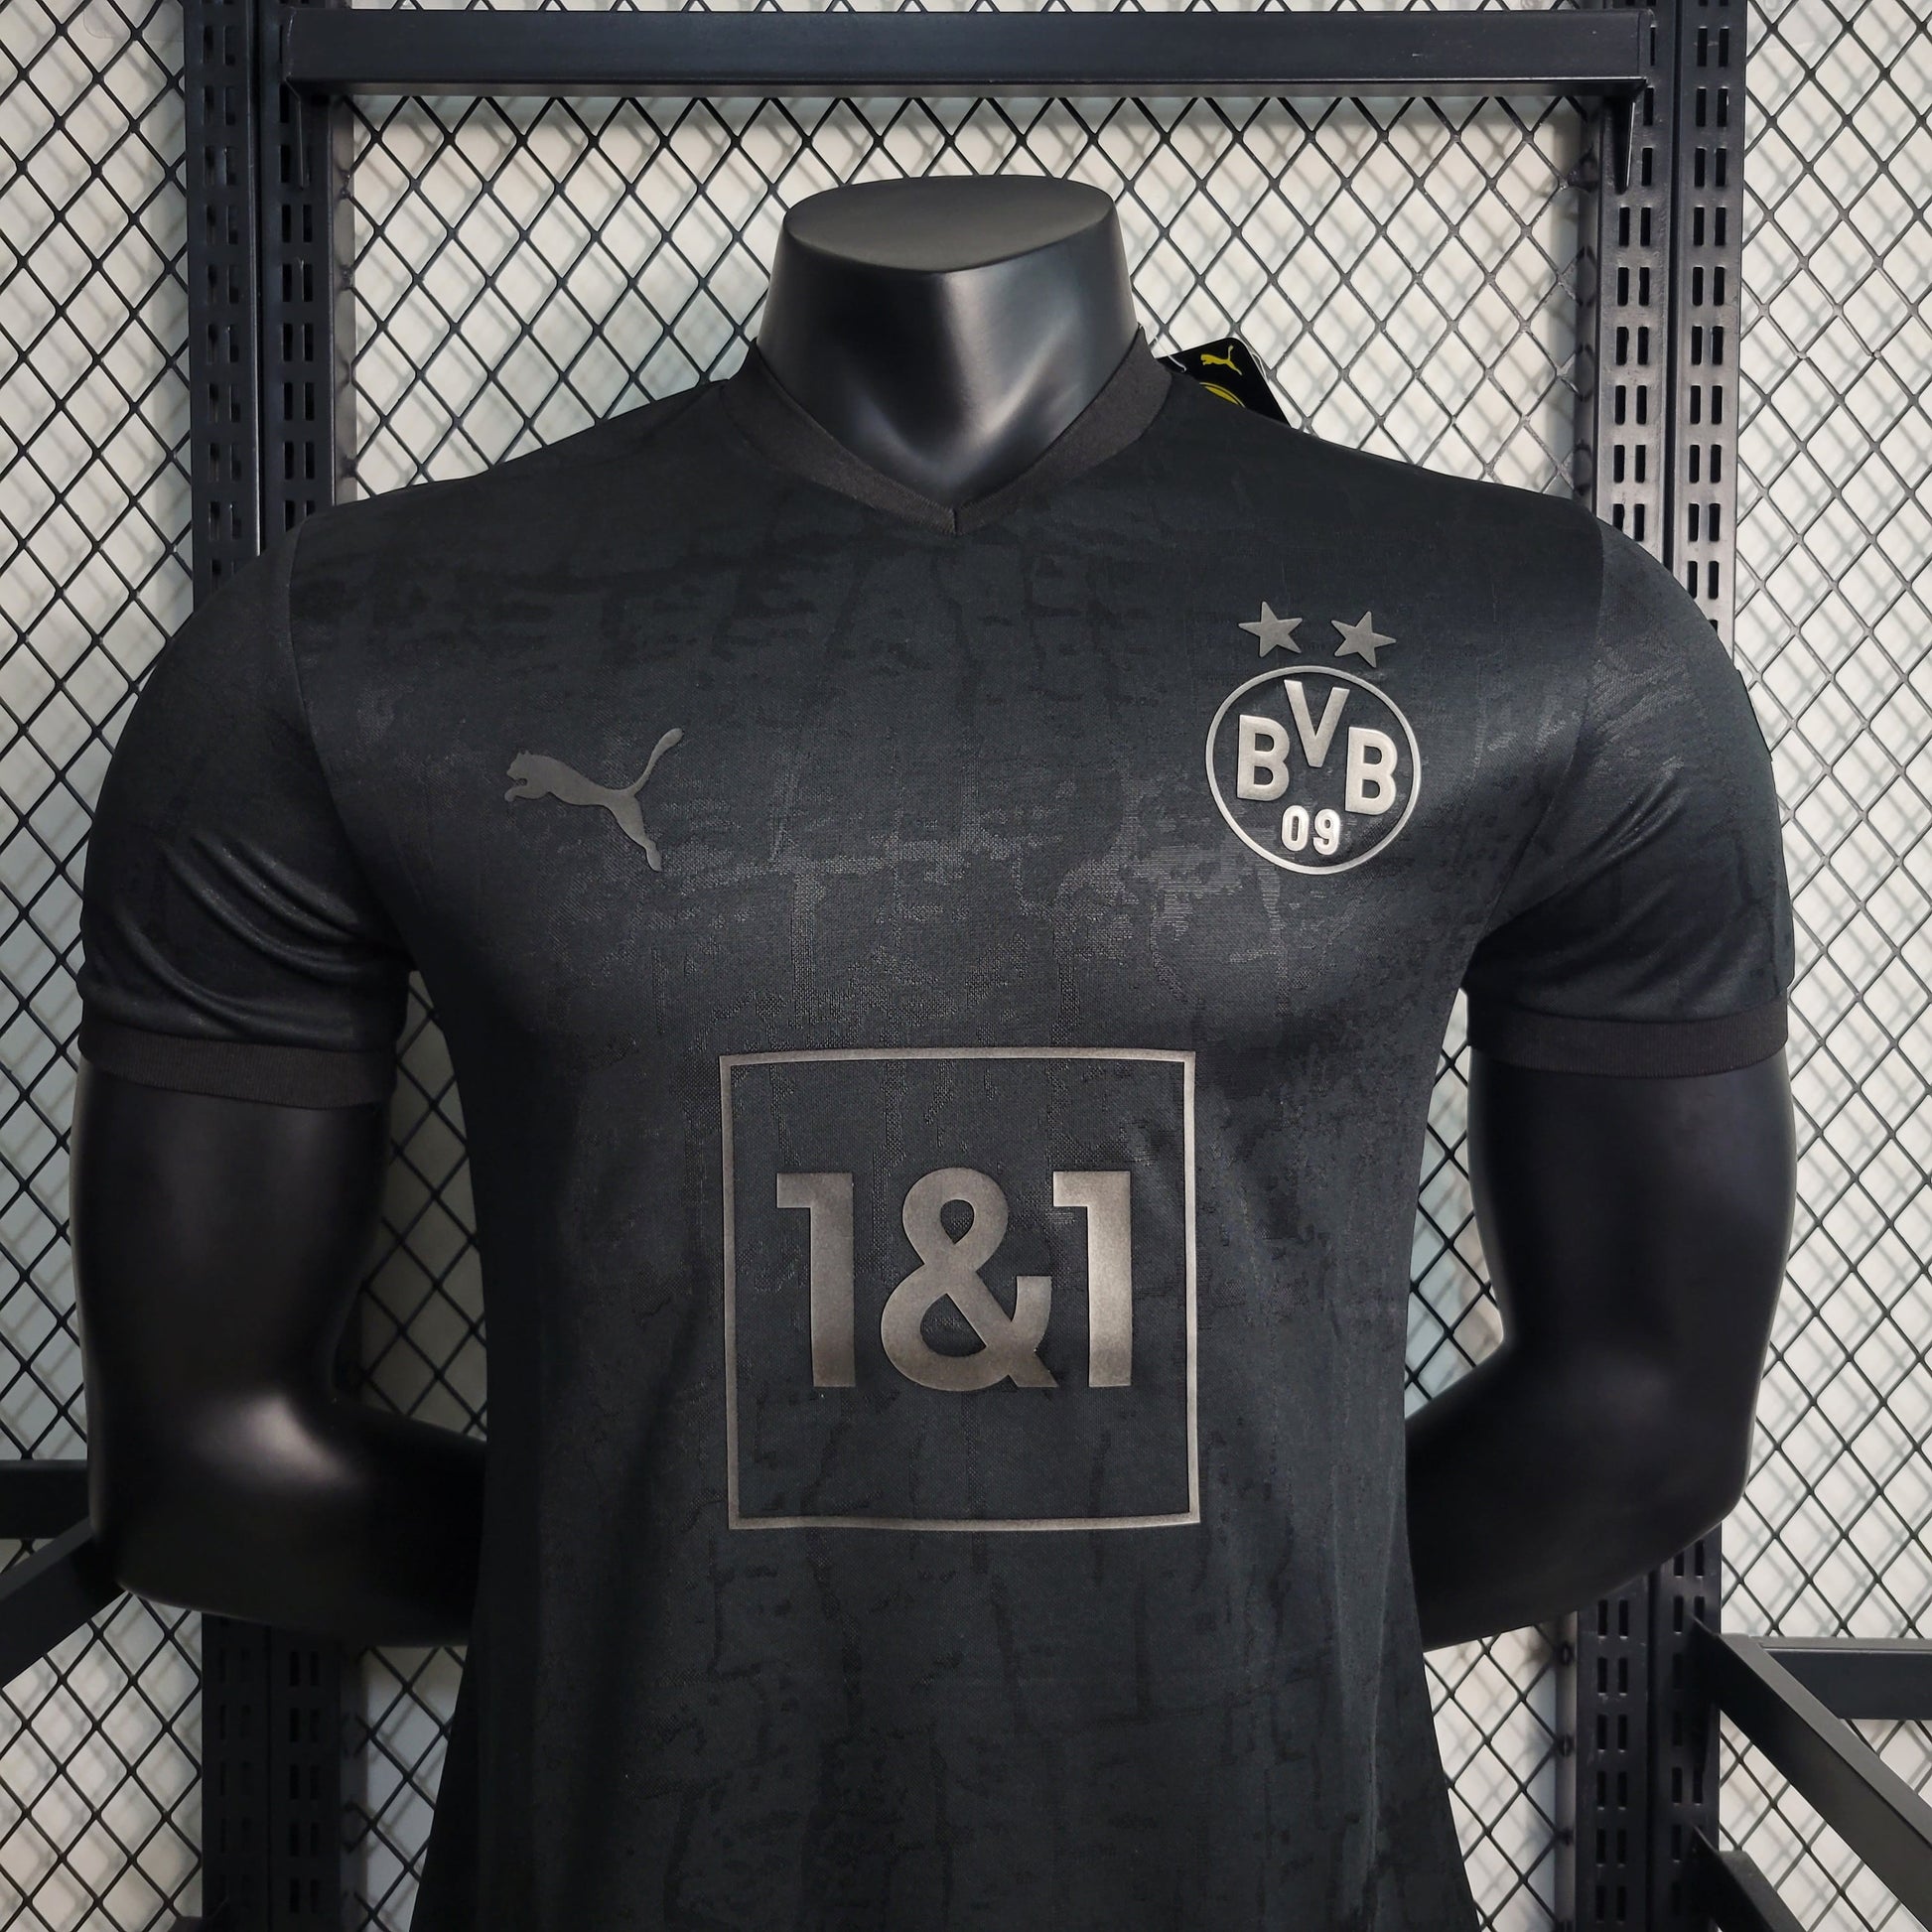 Dortmund Original – the new BVB away jersey for the 2023/24 season